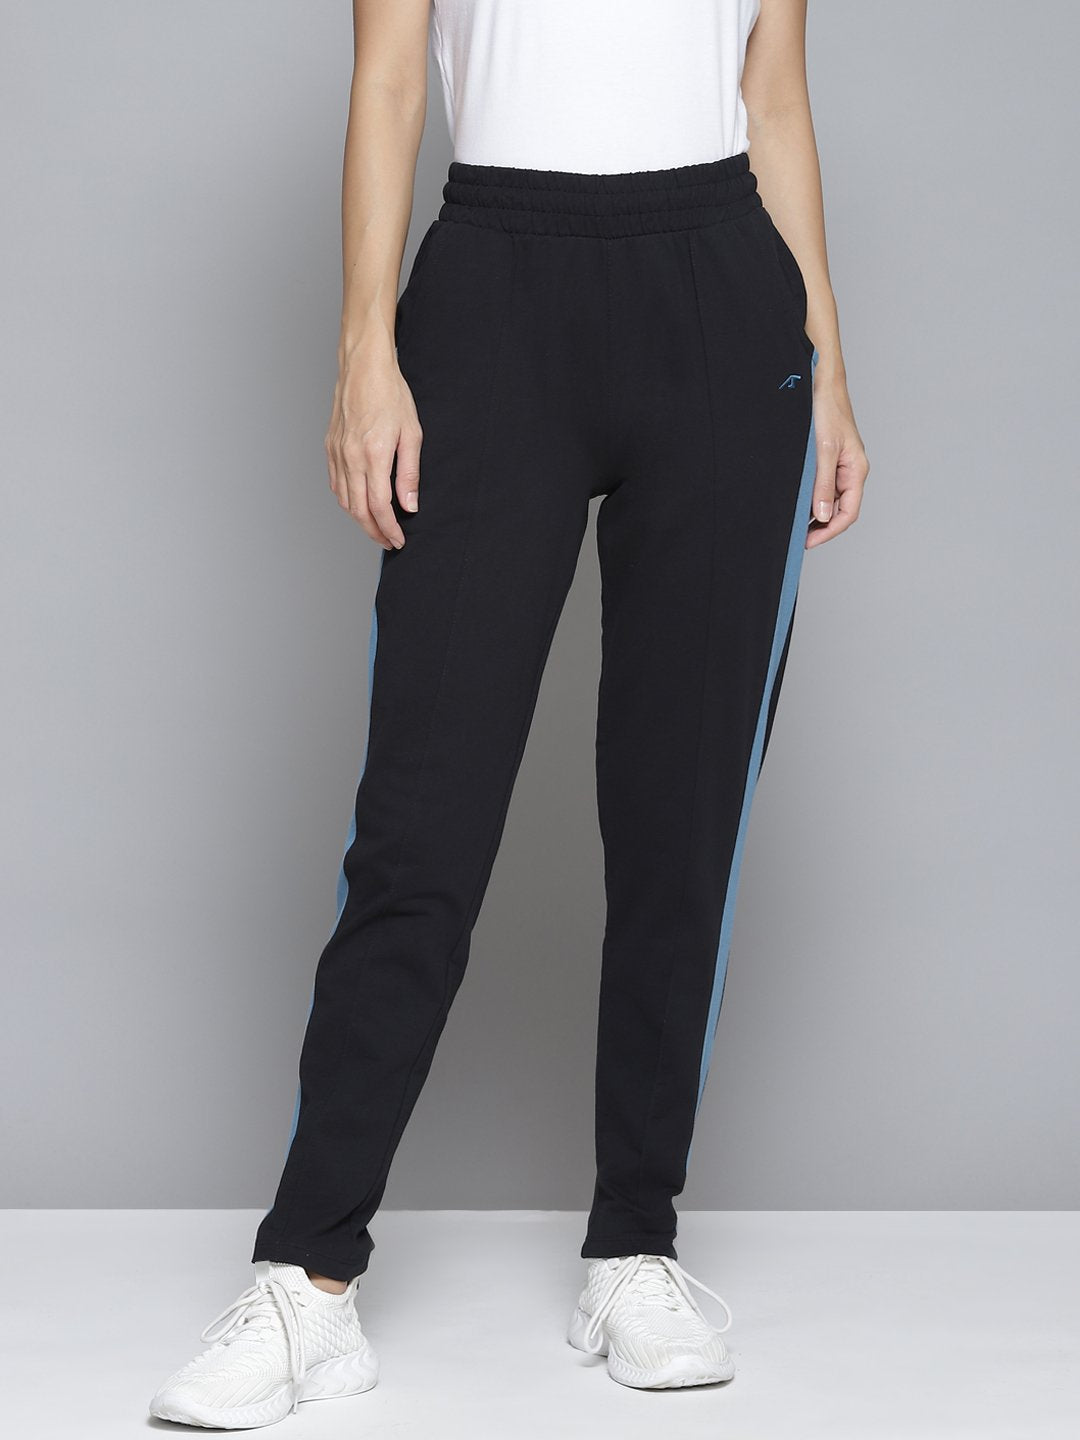 Alcis Women Black & Blue Striped Slim-Fit Track Pants